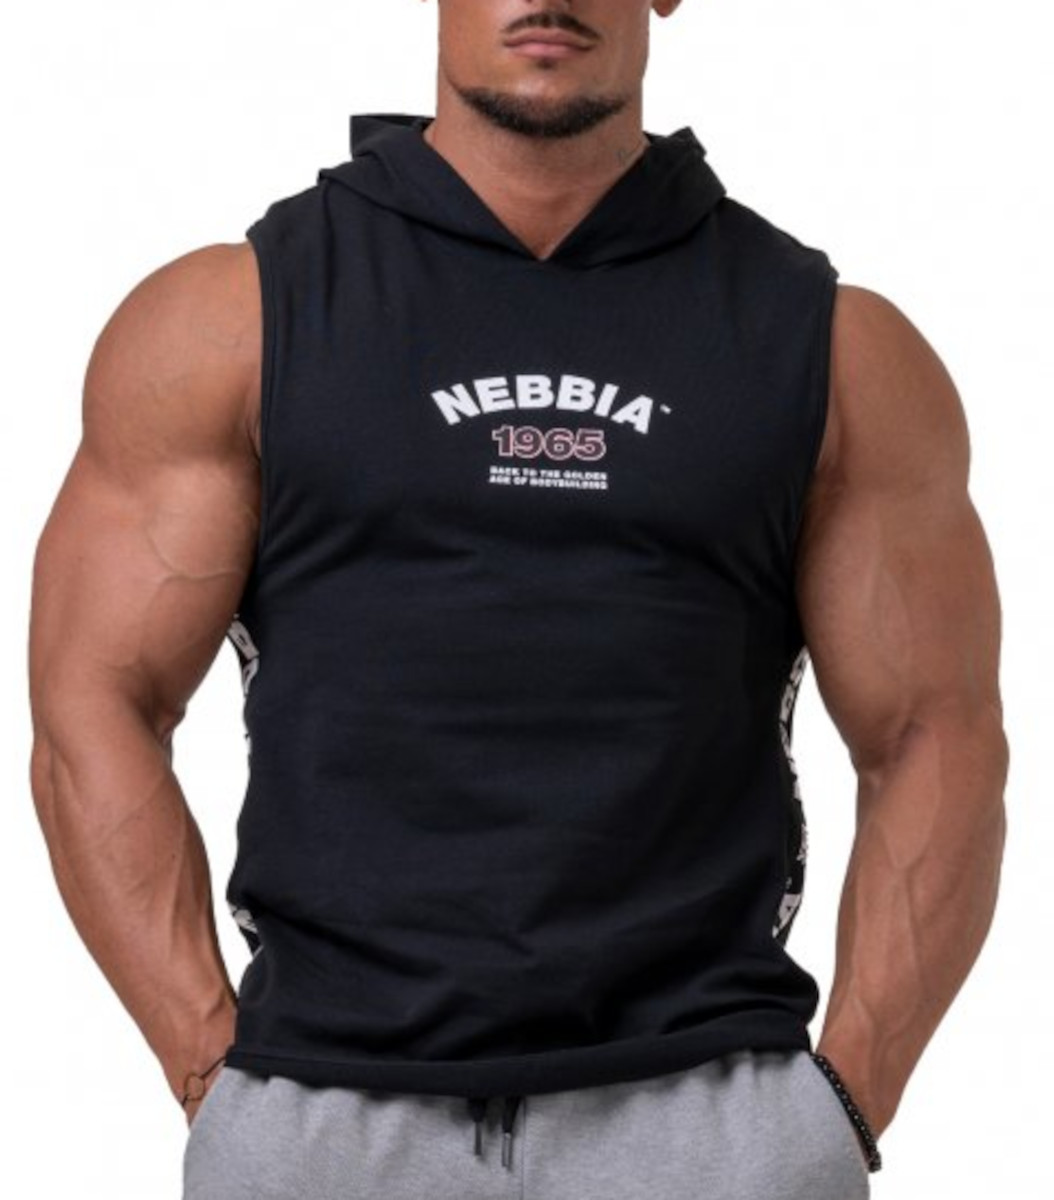 Camiseta sin mangas Nebbia Legend-approved hoodie tank top